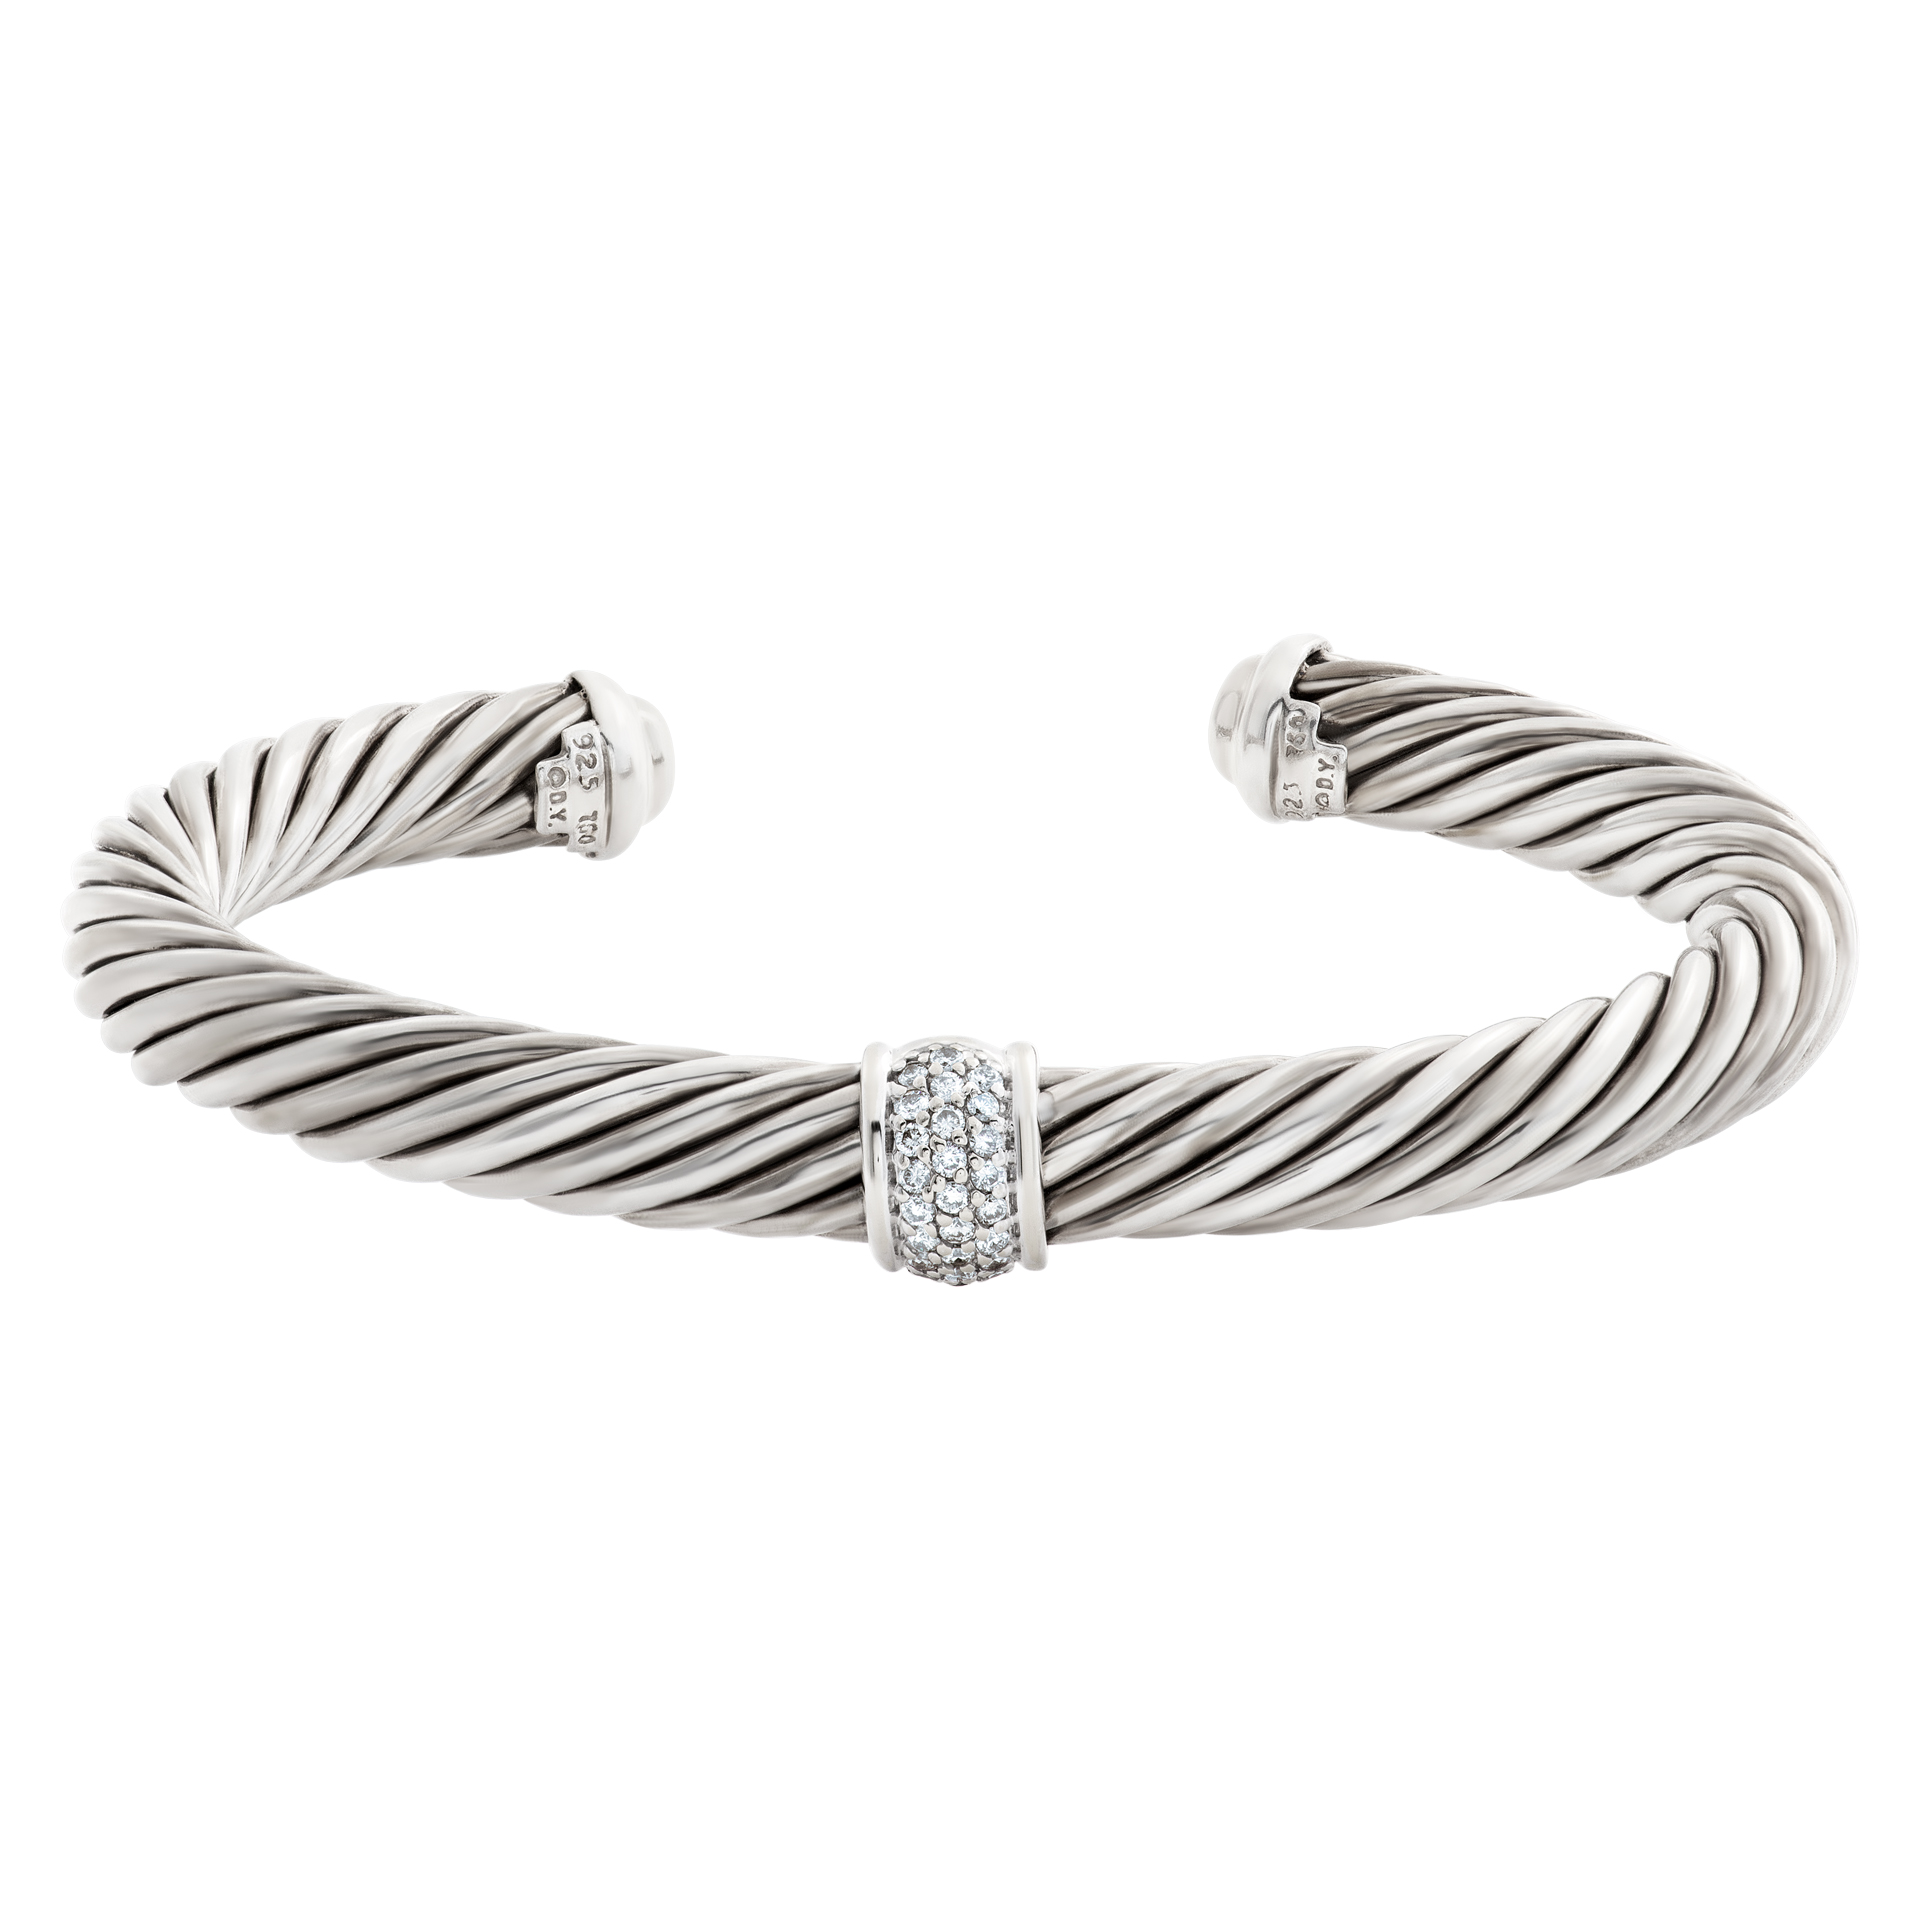 David Yurman Cable classic bracelet in sterling silver & 18k w/ pave diamonds